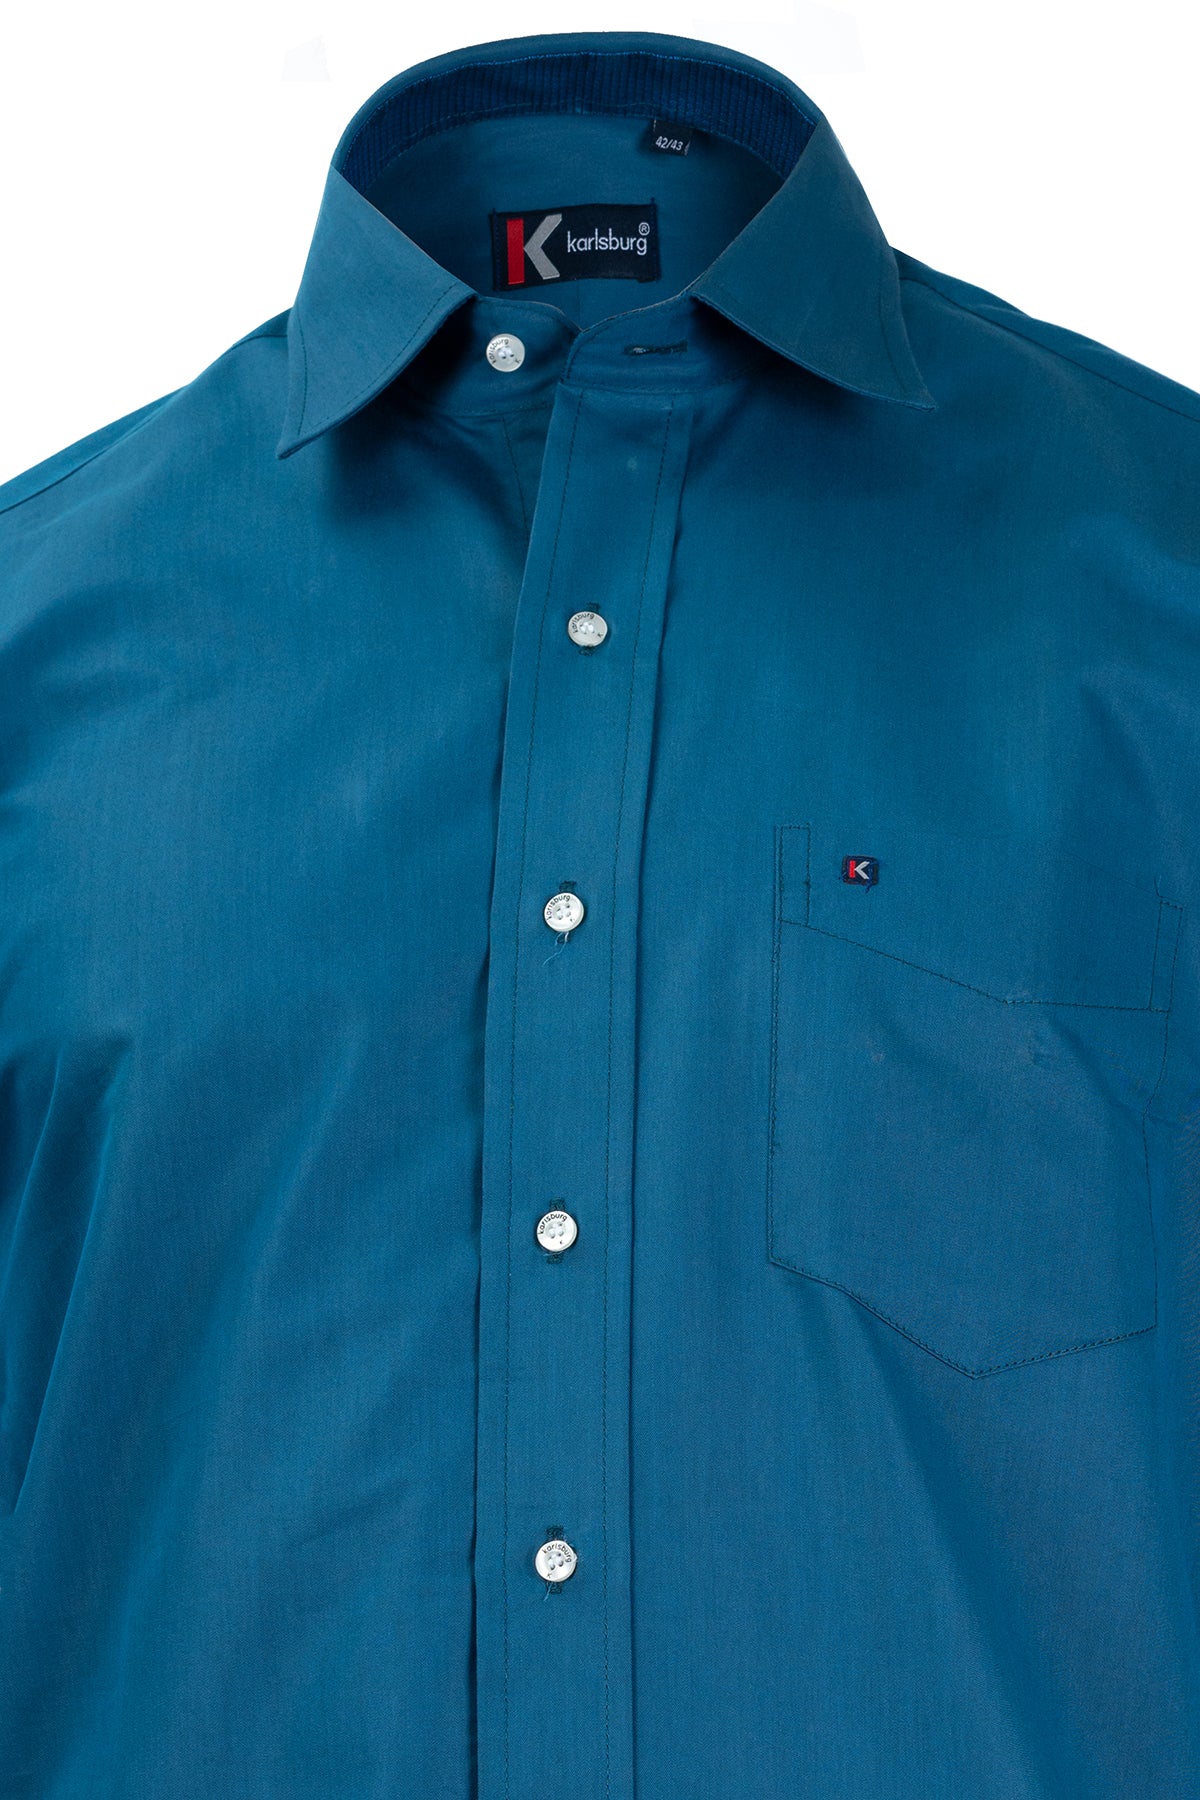 Men's Midnight Blue Slim FIt Shirt